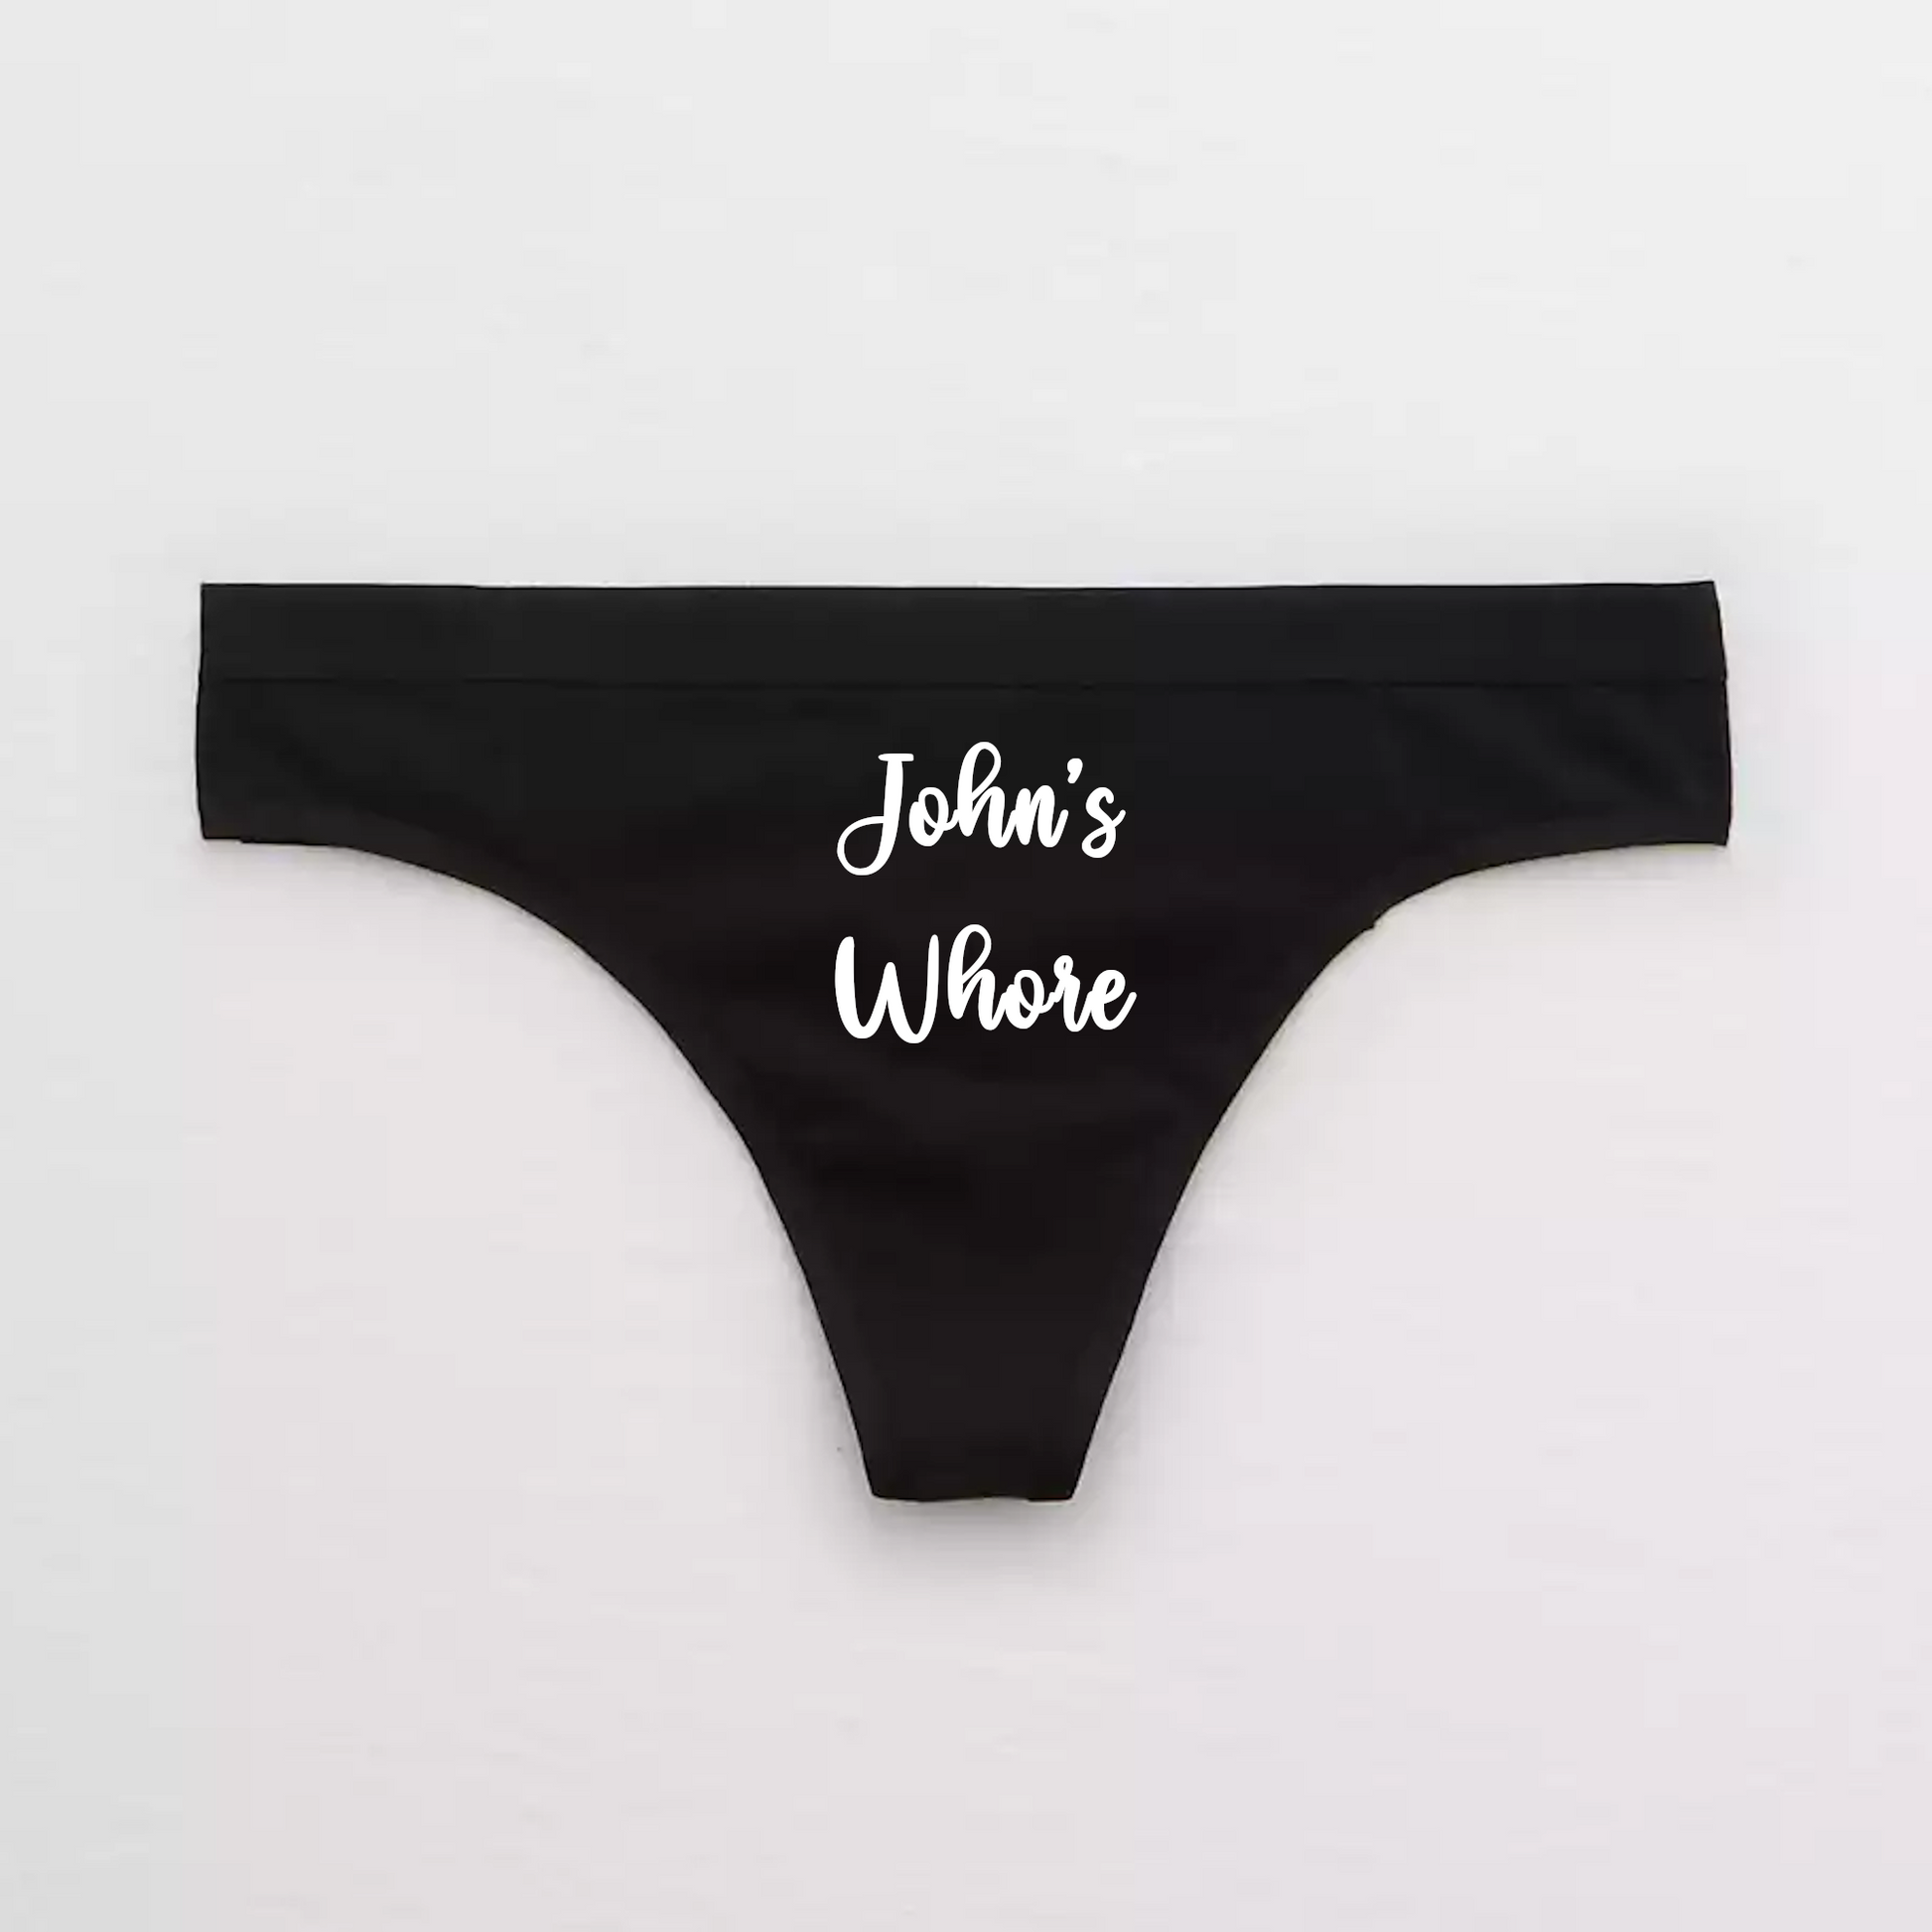 Names Whore Personalized Panties